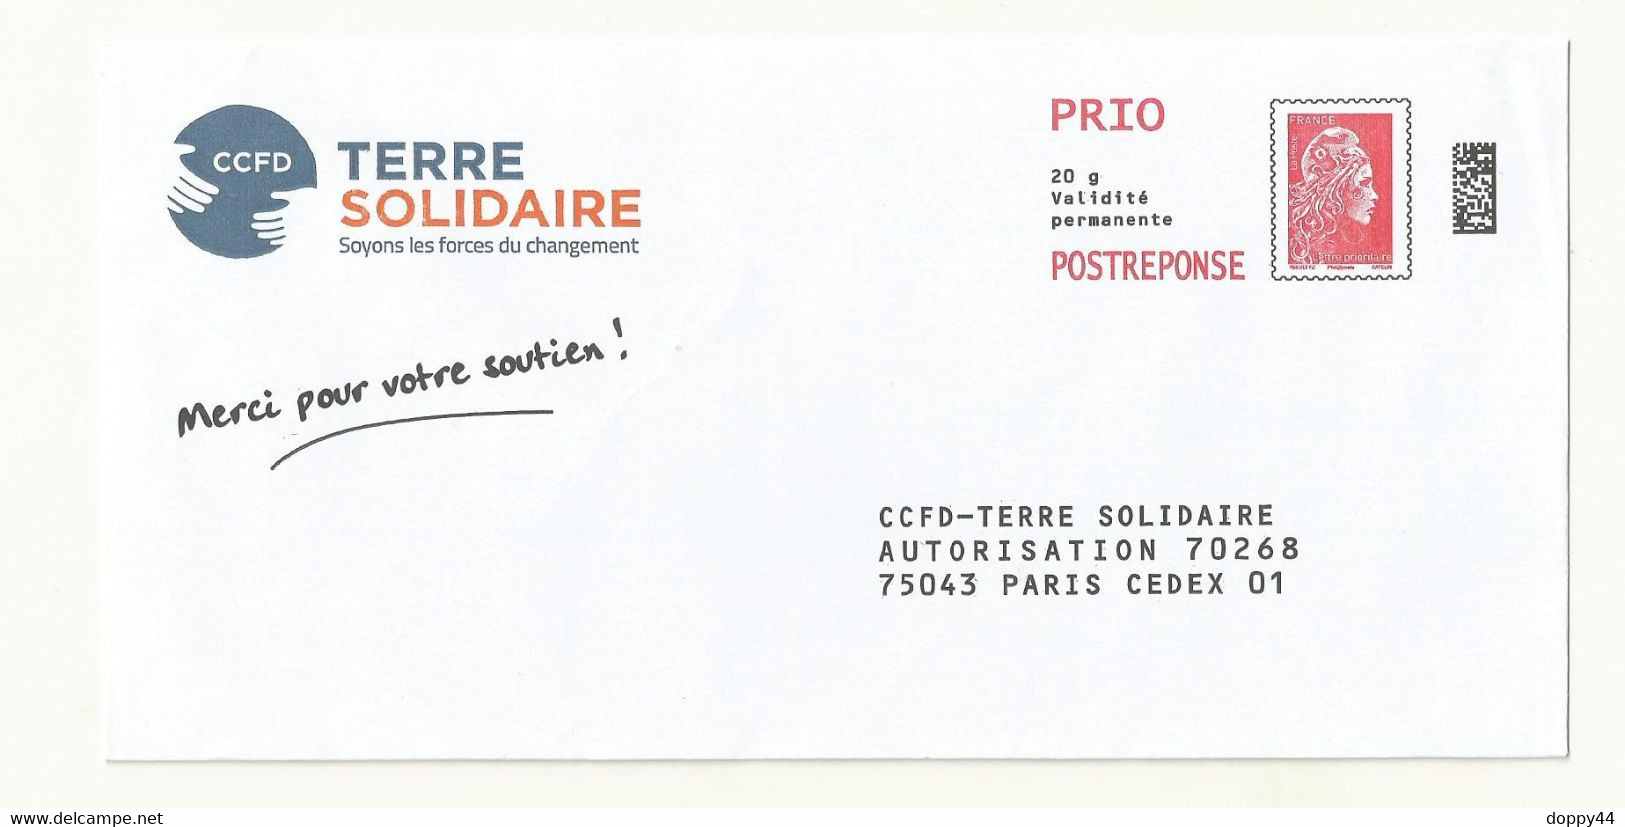 POSTREPONSE PRIO CCFD-TERRE SOLIDAIRE LOT 273030. - Prêts-à-poster:Answer/Marianne L'Engagée